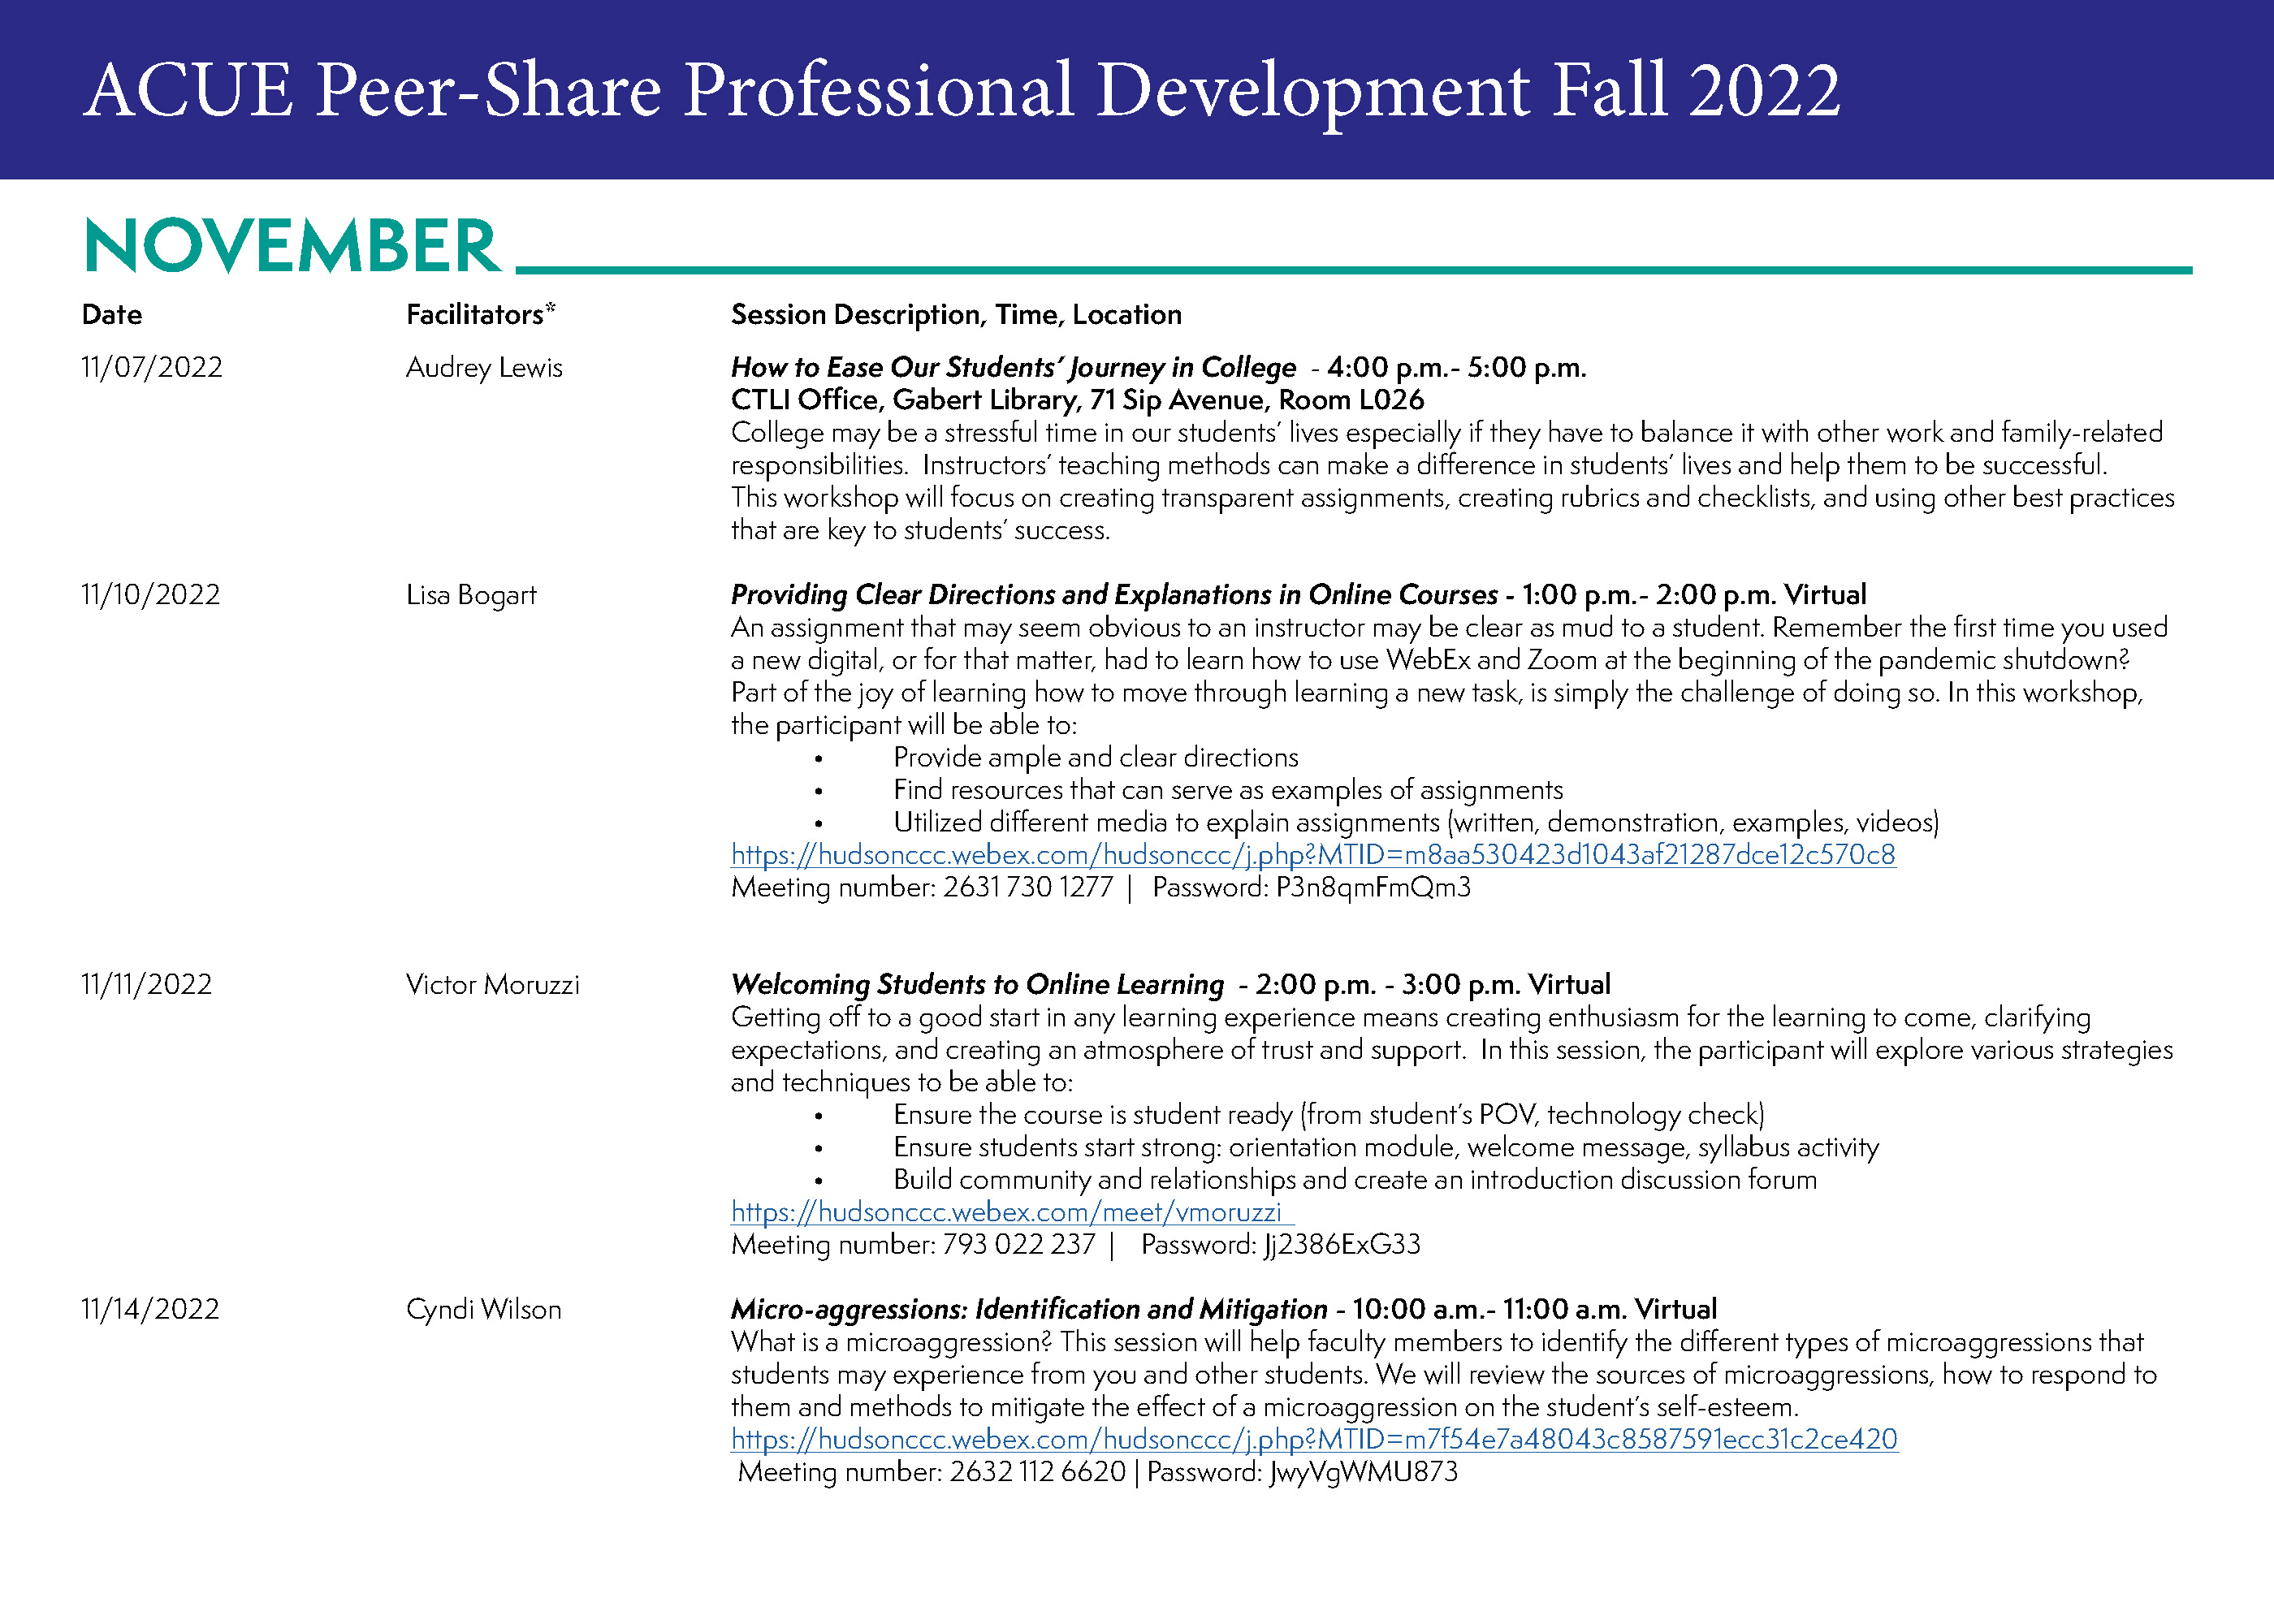 ACUE Peer-Share Professional Development Fall 2022 - November Schedule